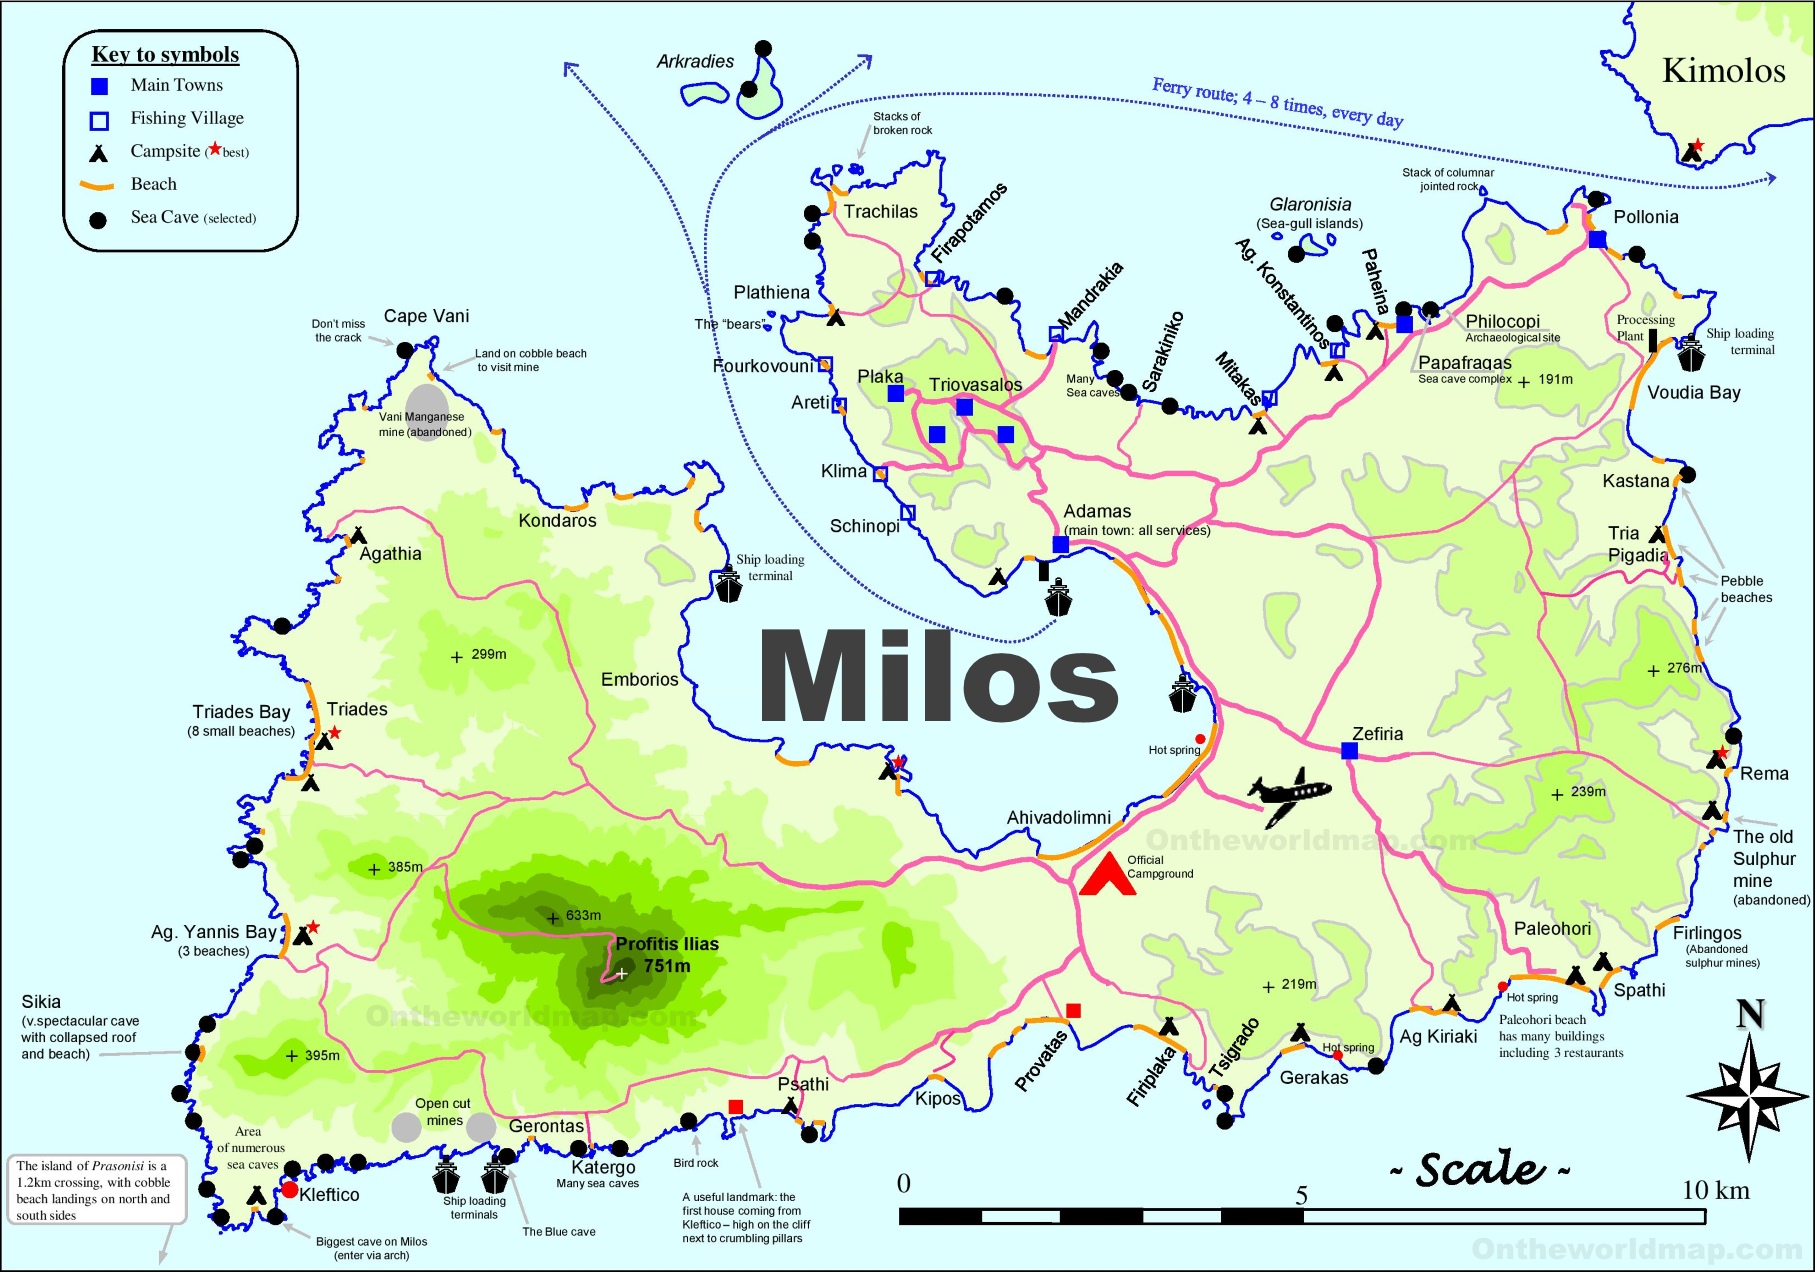 milos-tourist-map.jpg